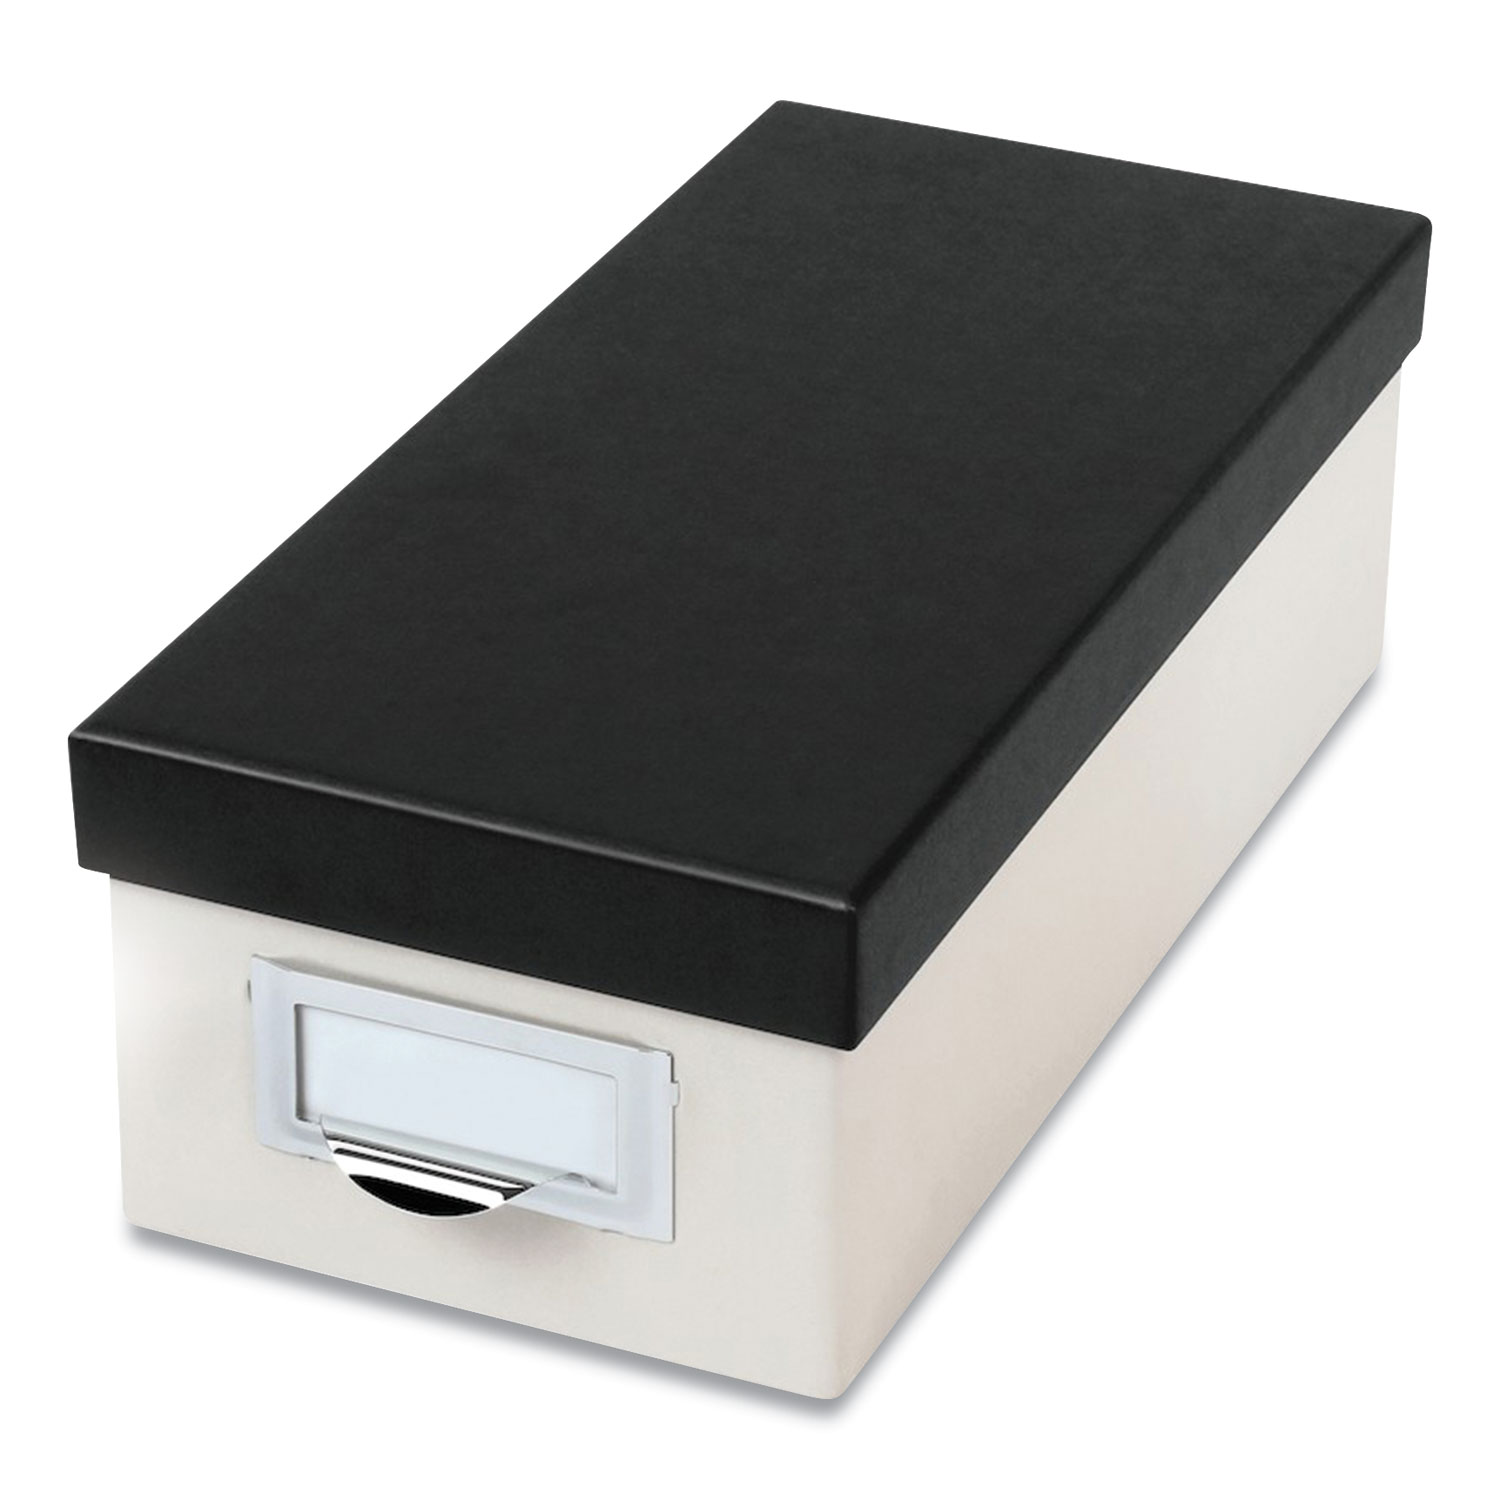  Oxford 406350 Index Card Storage Box, Holds 1,000 3 x 5 Cards, Pressboard, Marble White/Black, 5.5 x 11.5 x 3.88 (OXF24401226) 